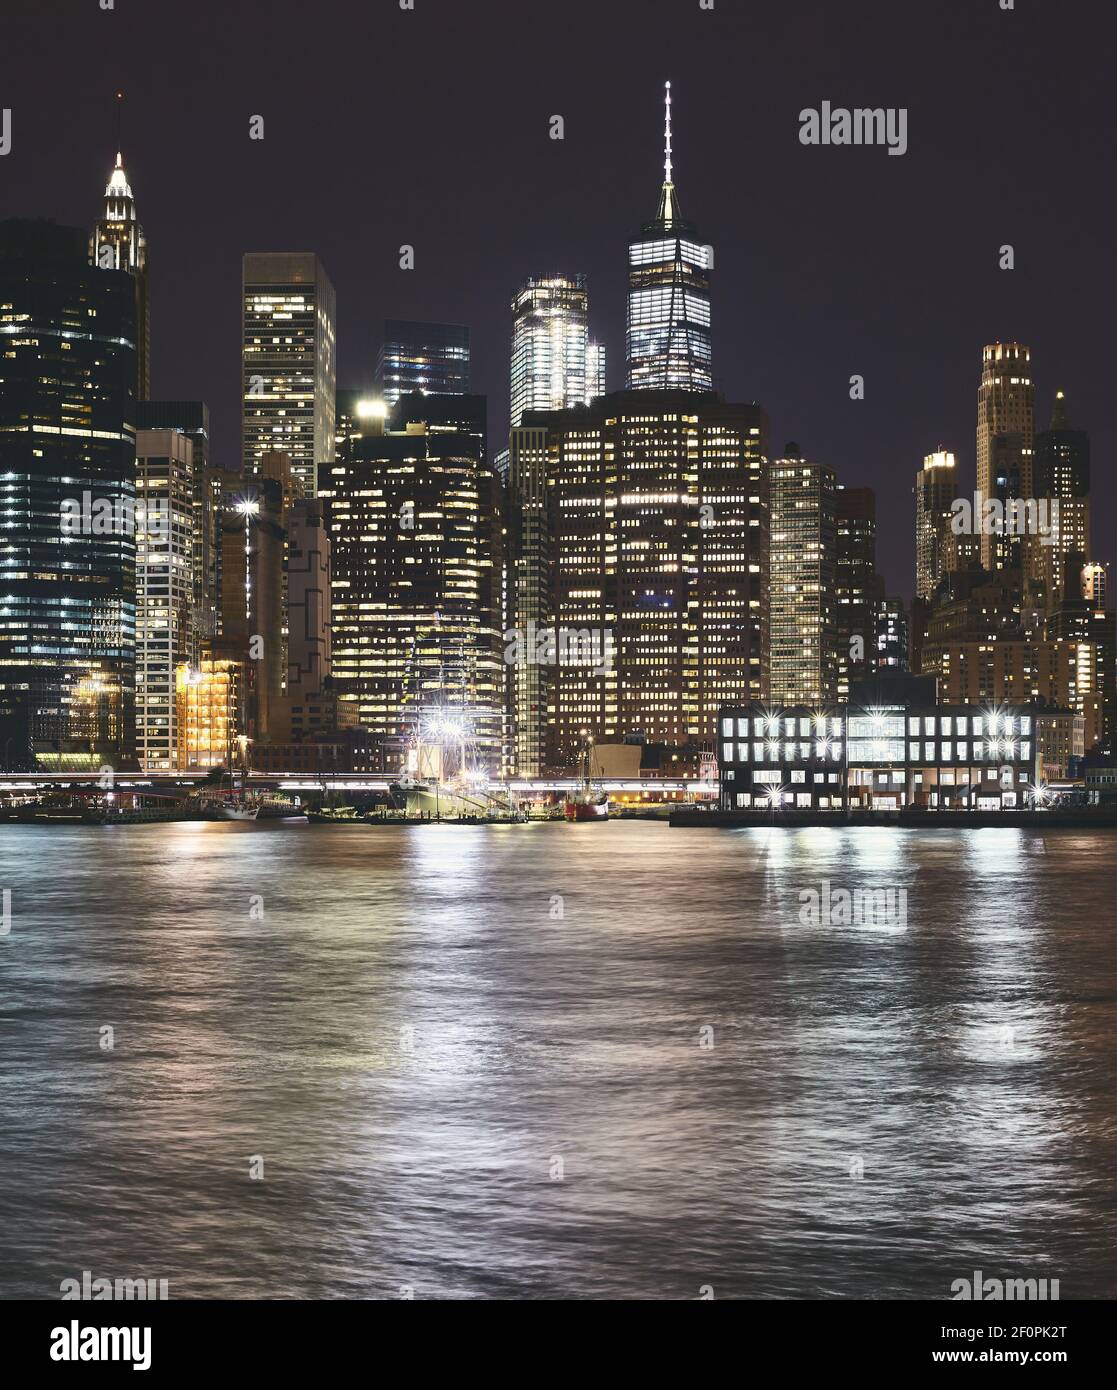 New York City skyline at night, USA. Stock Photo